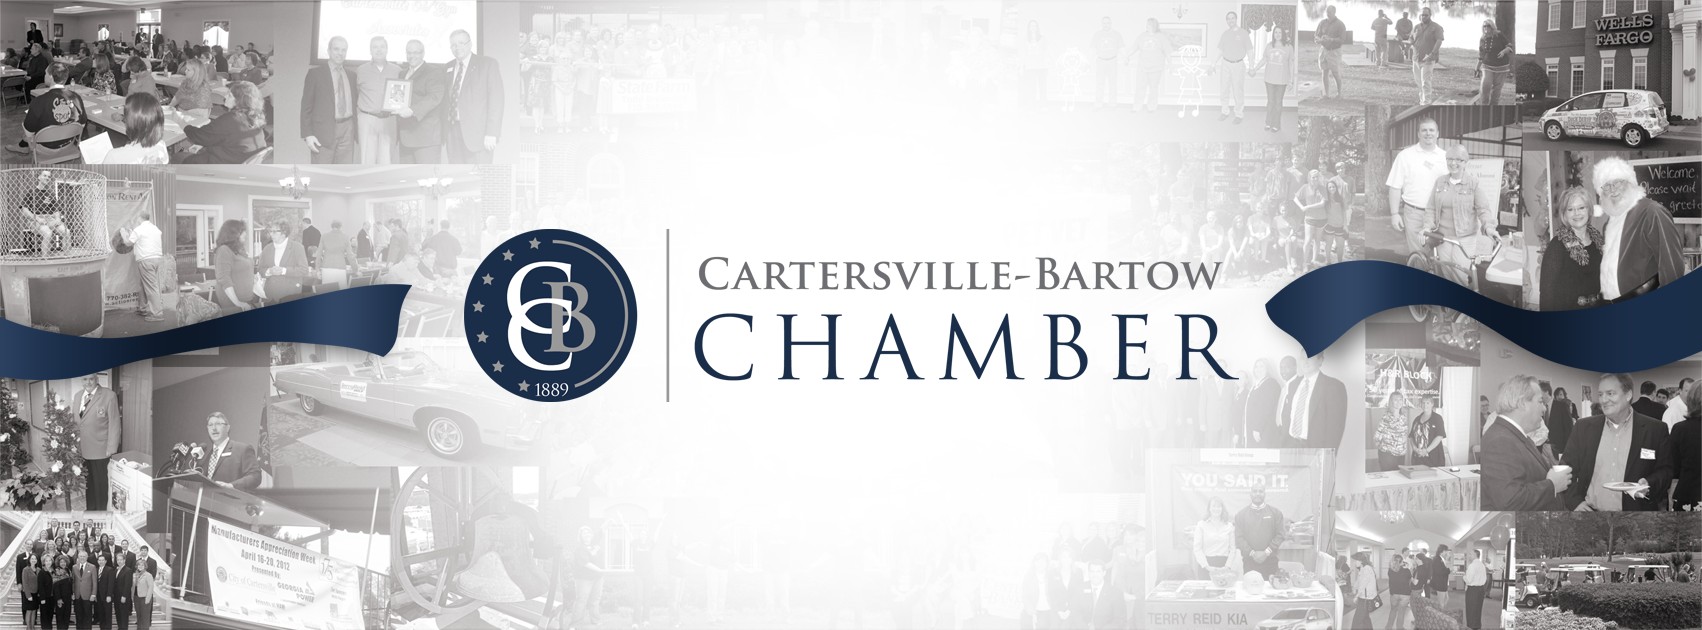 Cartersville-Bartow Chamber of Commerce Logo Design